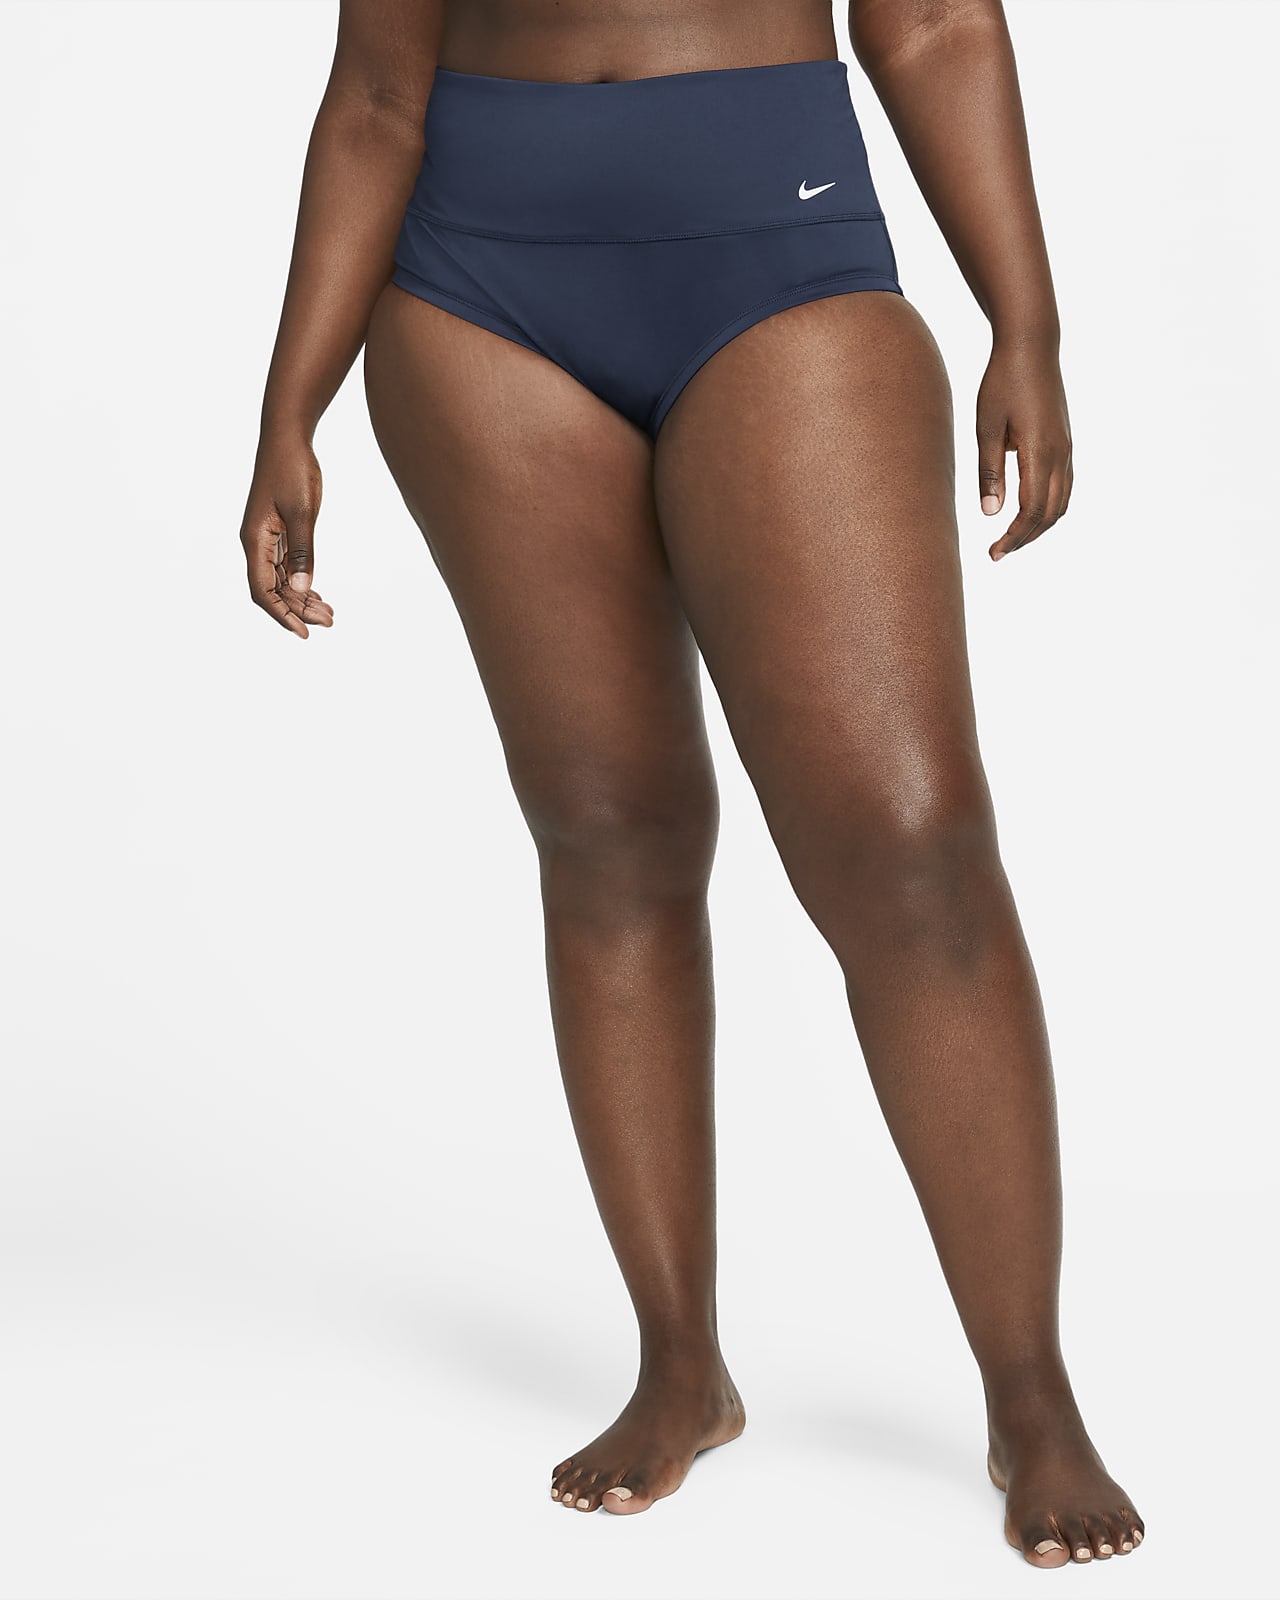 Nike Women's Plus Size, Hibbett